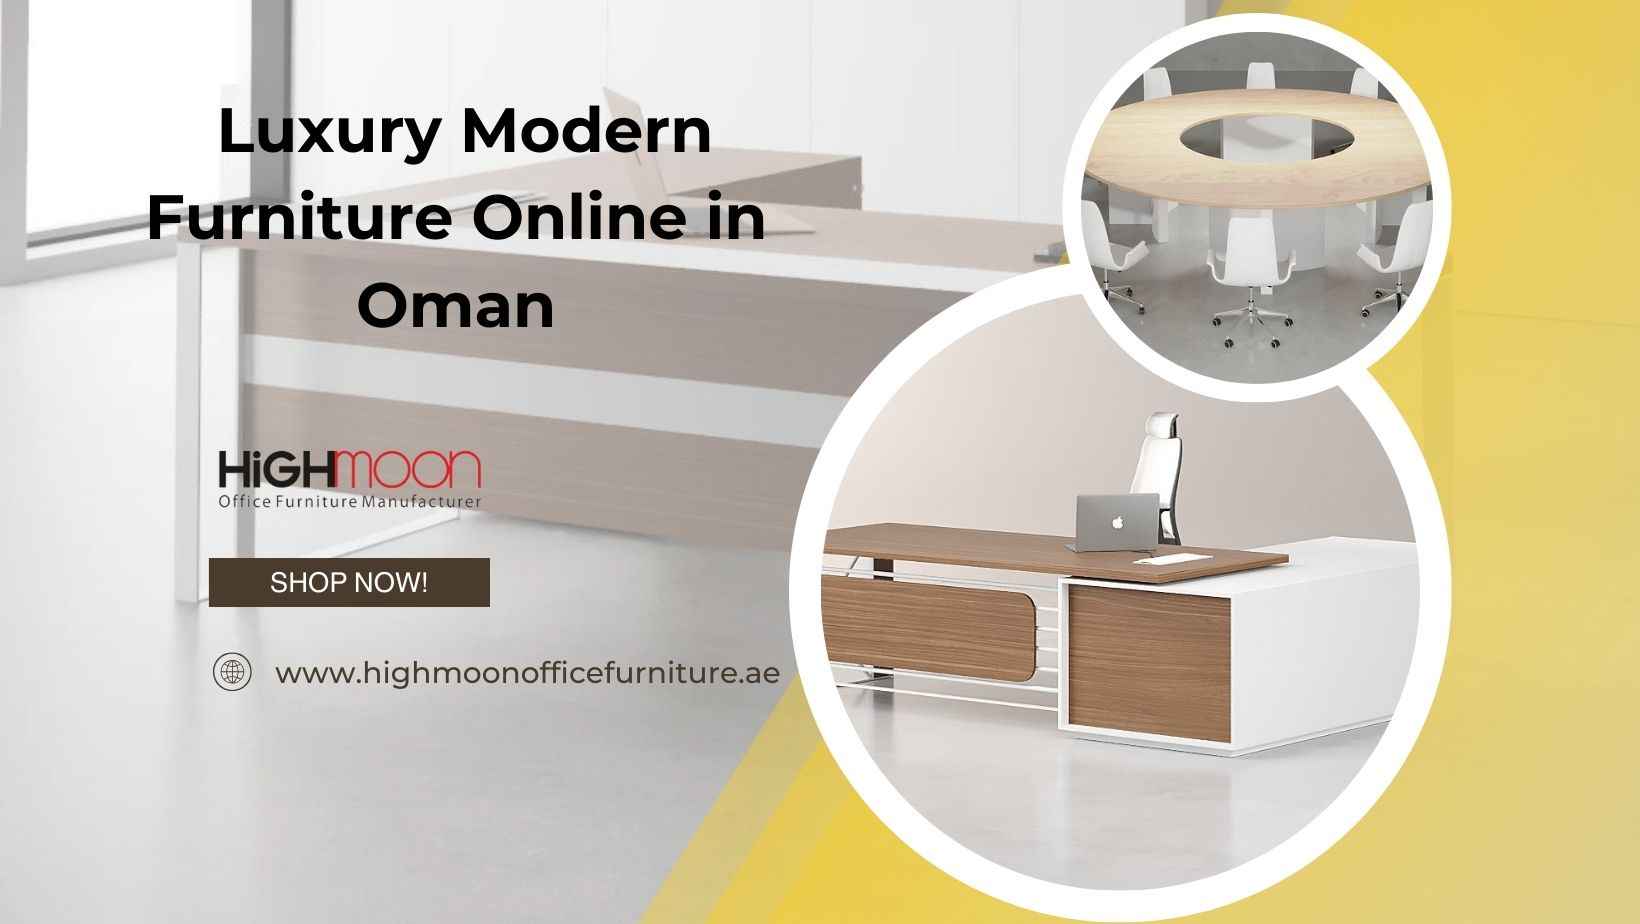 High Quality Luxury Modern Furniture Online in Oman